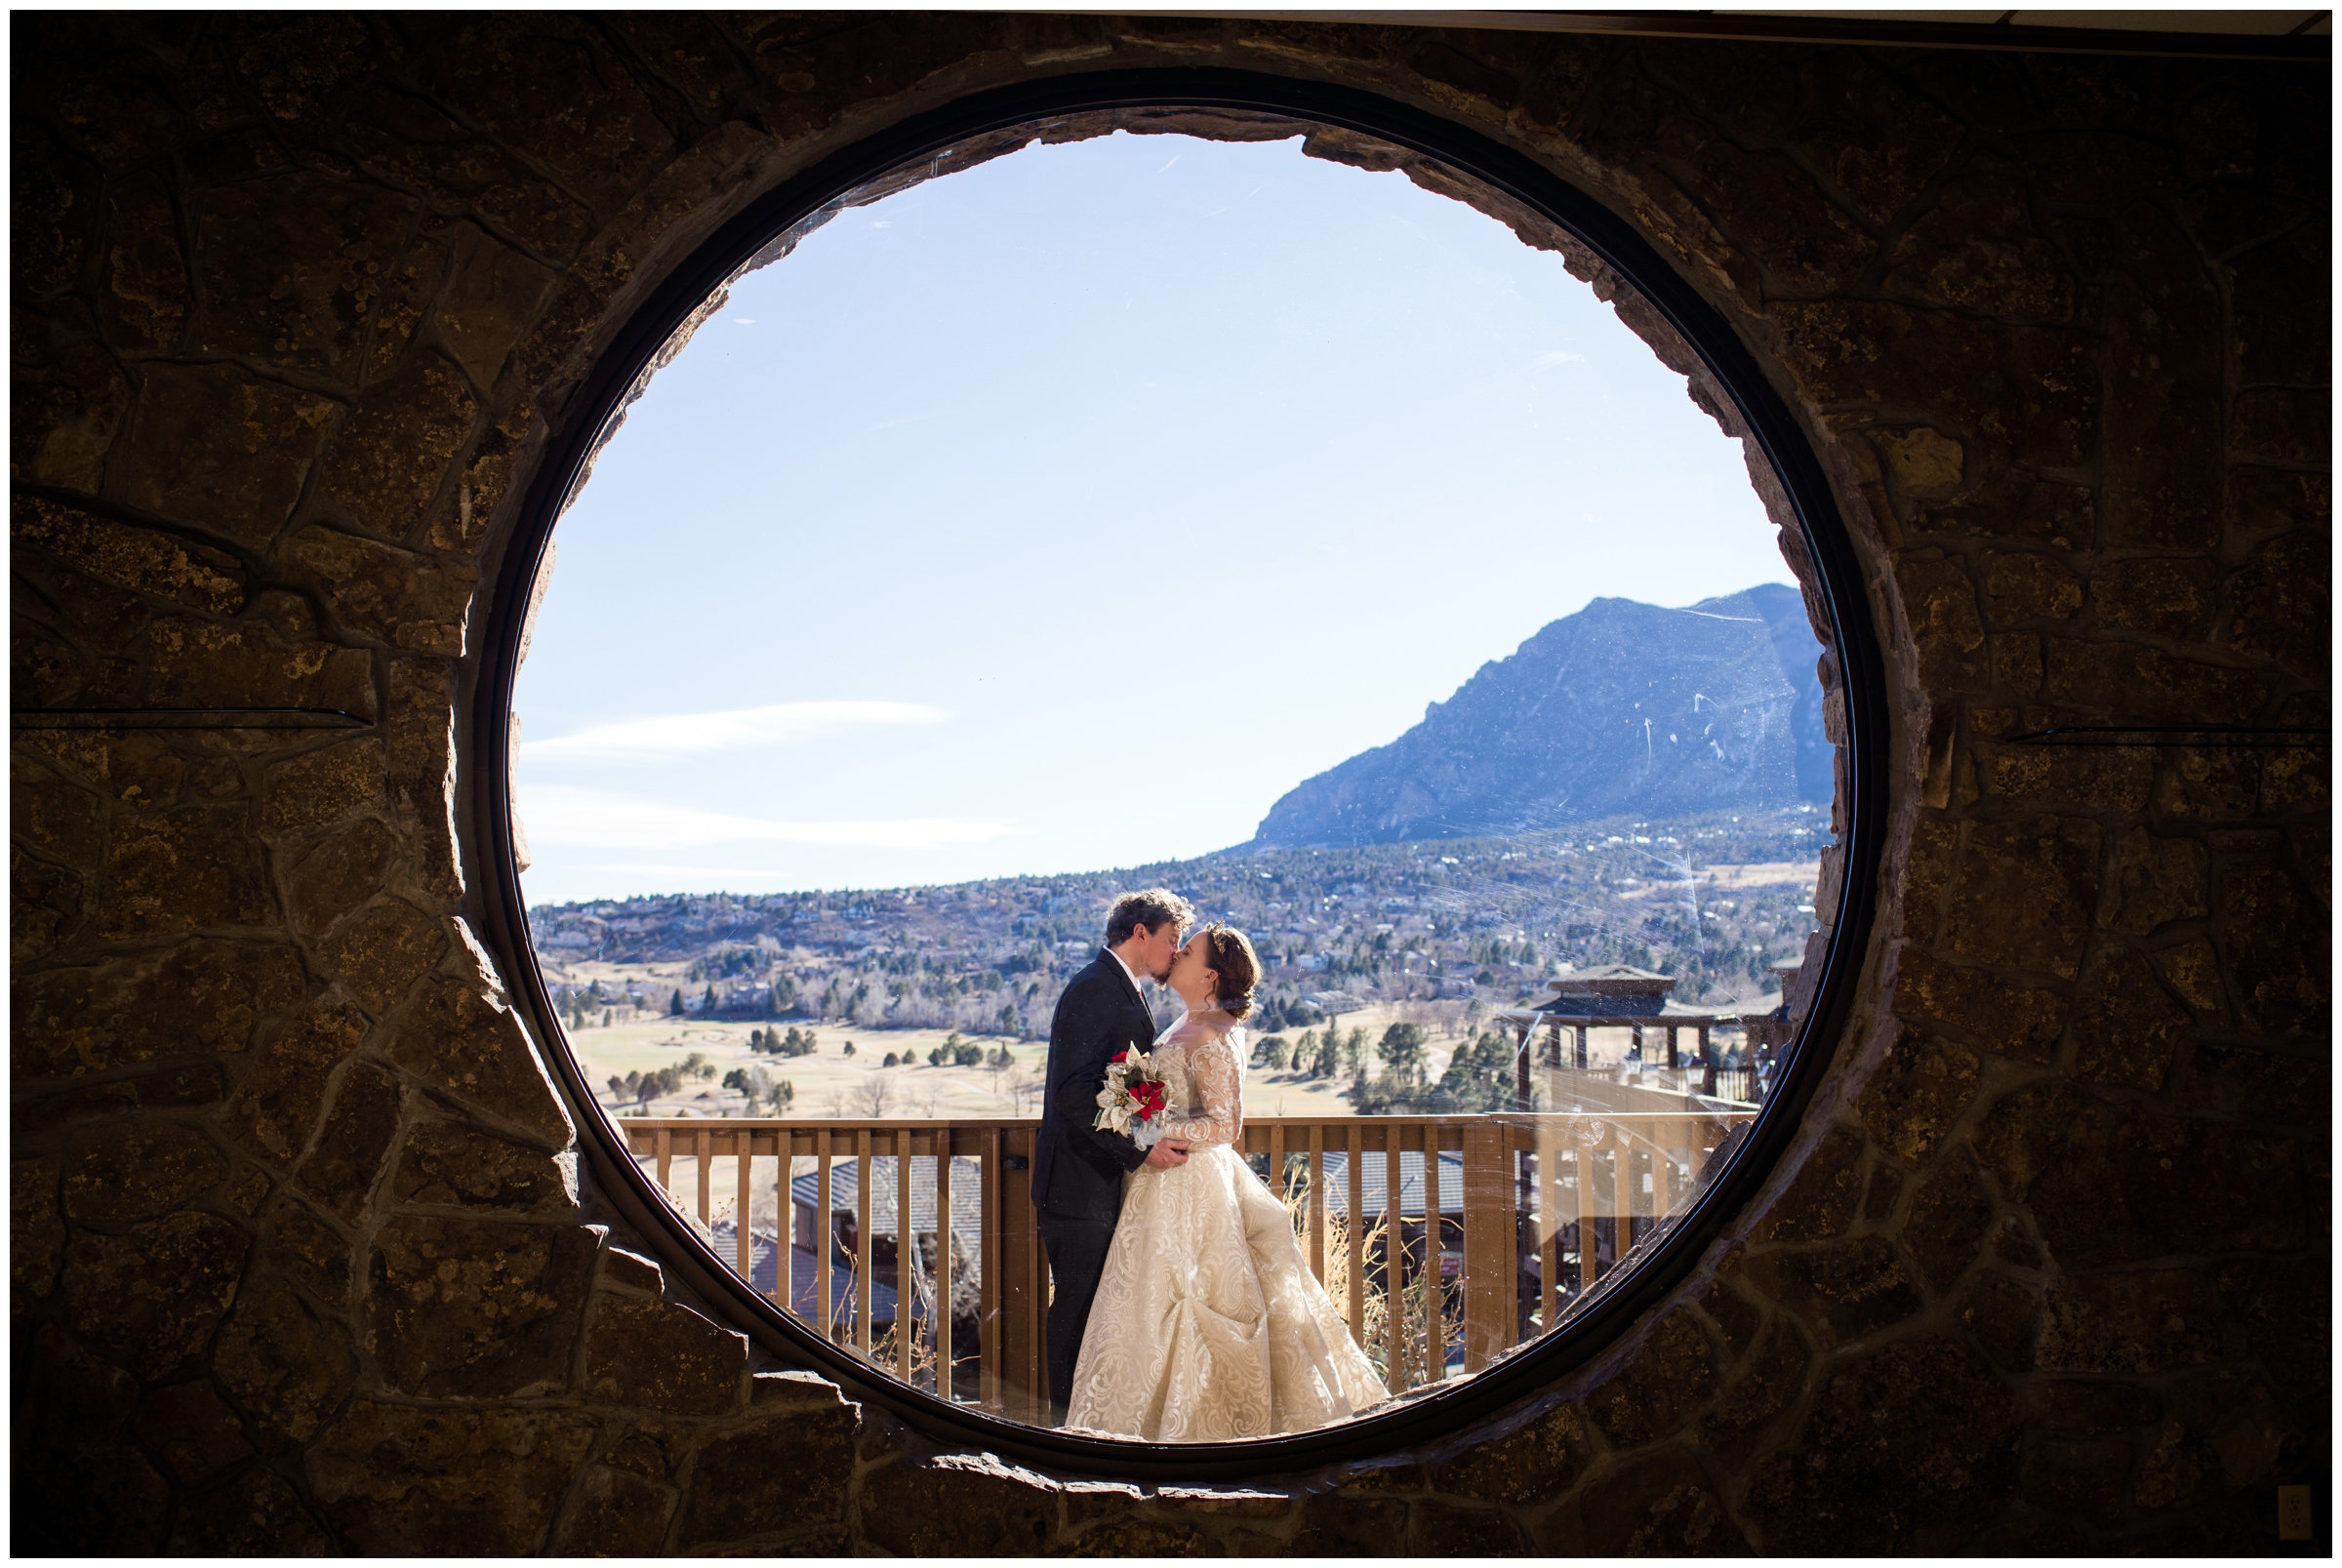 Cheyenne Mountain Resort wedding photos by Colorado Springs photographer Plum Pretty Photography